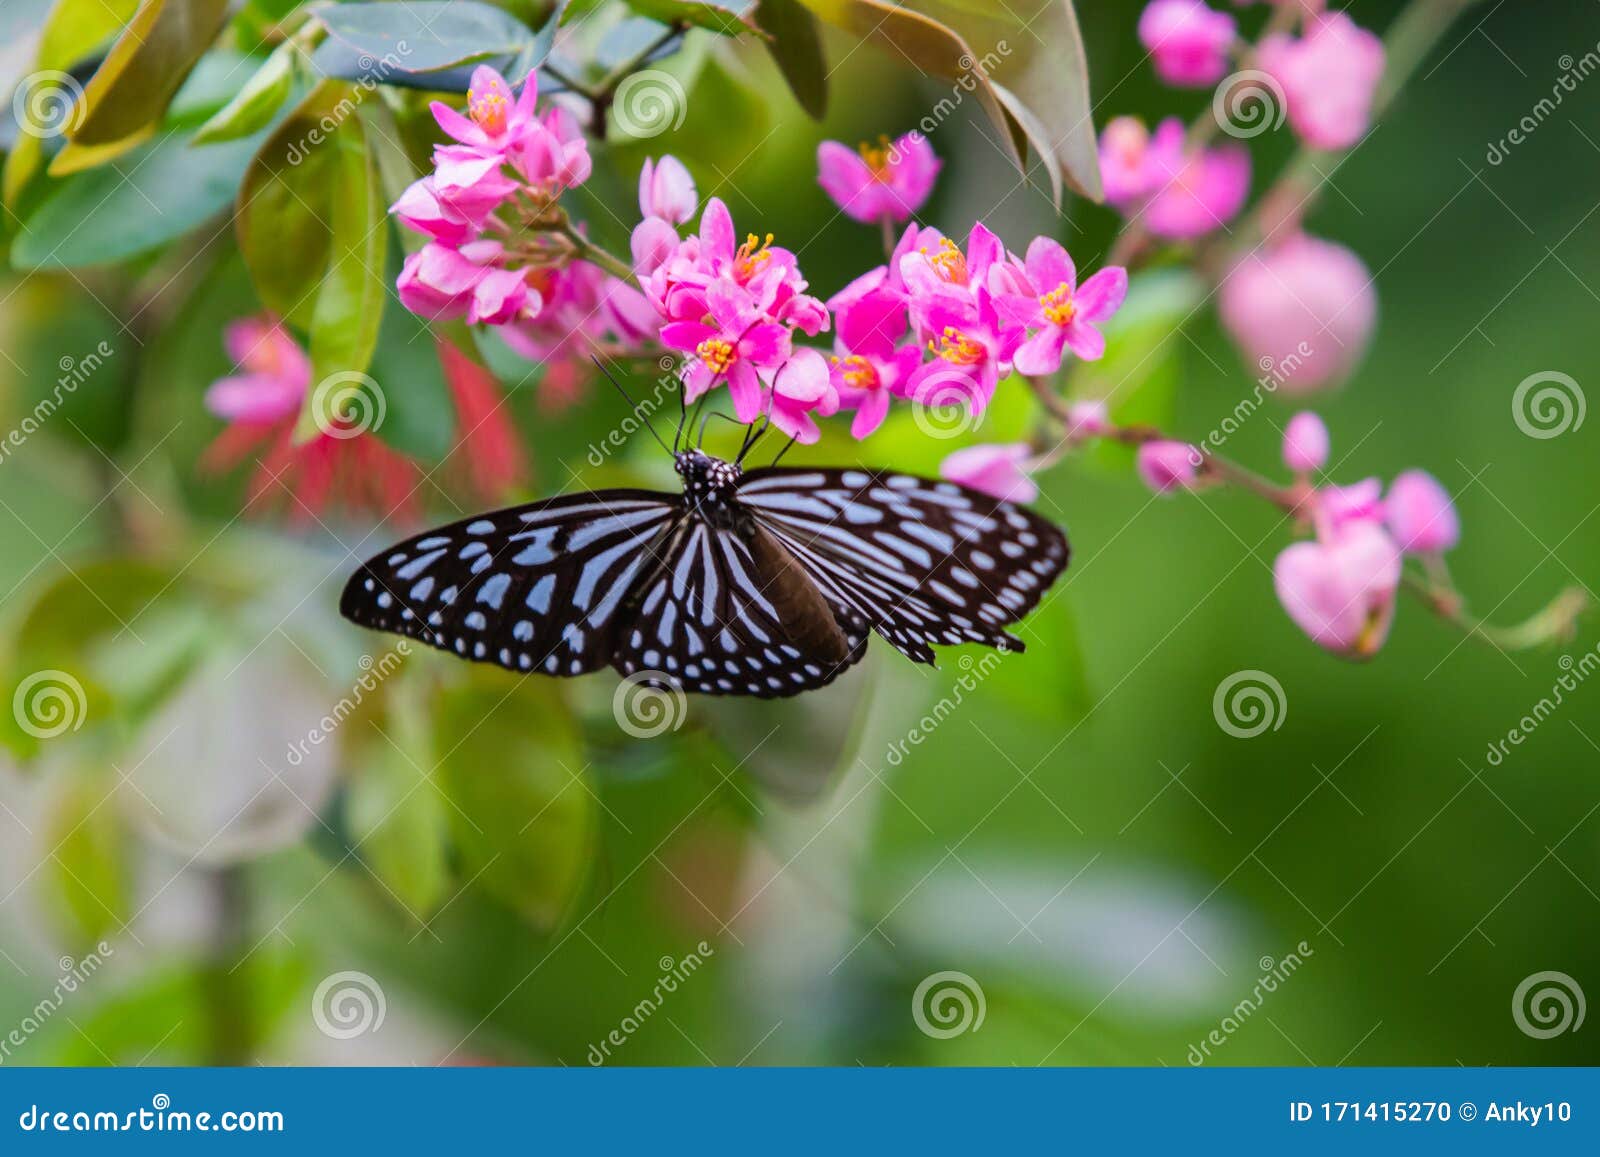 tirumala septentrionis, the dark blue tiger butterfly